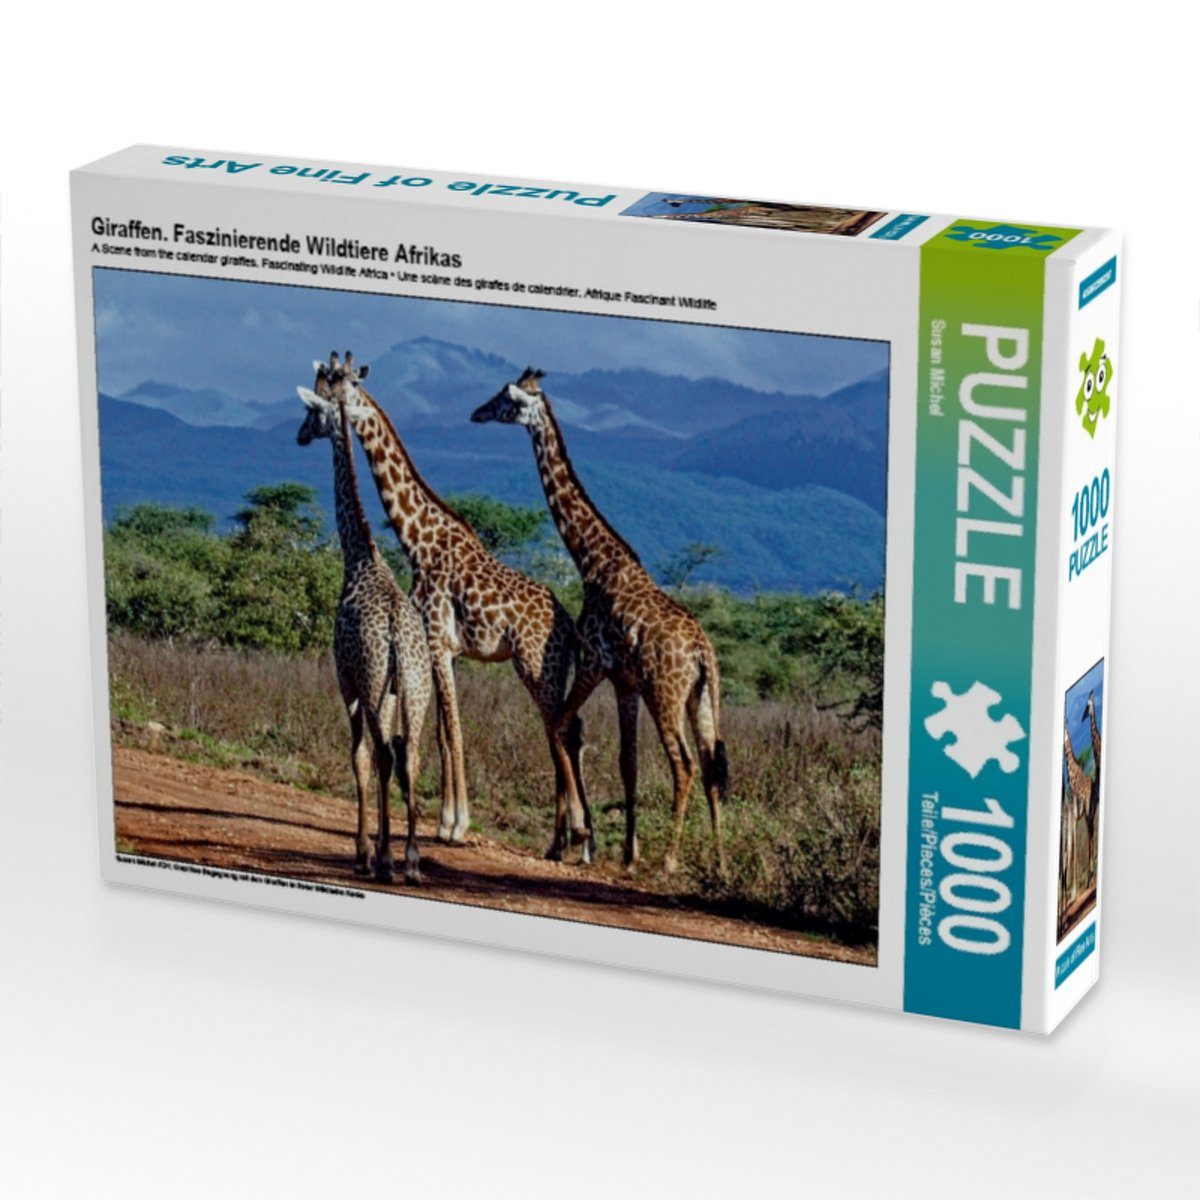 64 cm Foto-Puzzle Faszinierende Teile Bild Puzzle CALVENDO Susan x Puzzle 48 Puzzleteile Afrikas von Wildtiere CALVENDO Lege-Größe 1000 1000 Giraffen. Michel,